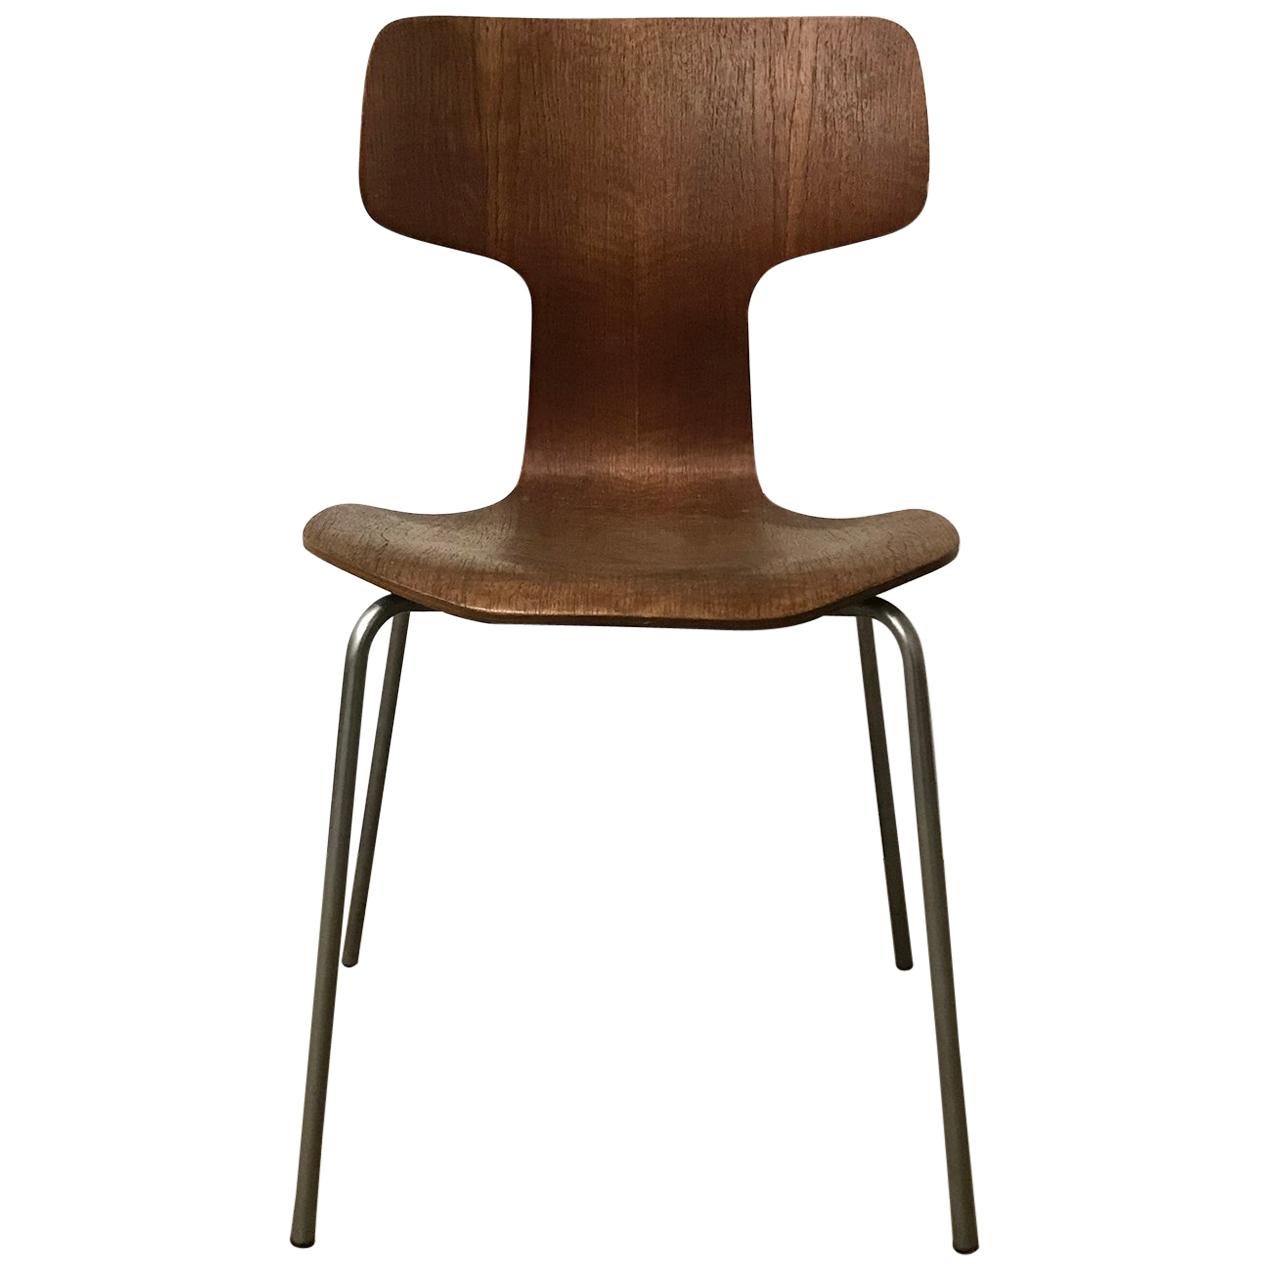 1955, Arne Jacobsen for Fritz Hansen, Original, Rare, Chair 3103 with Grey Base